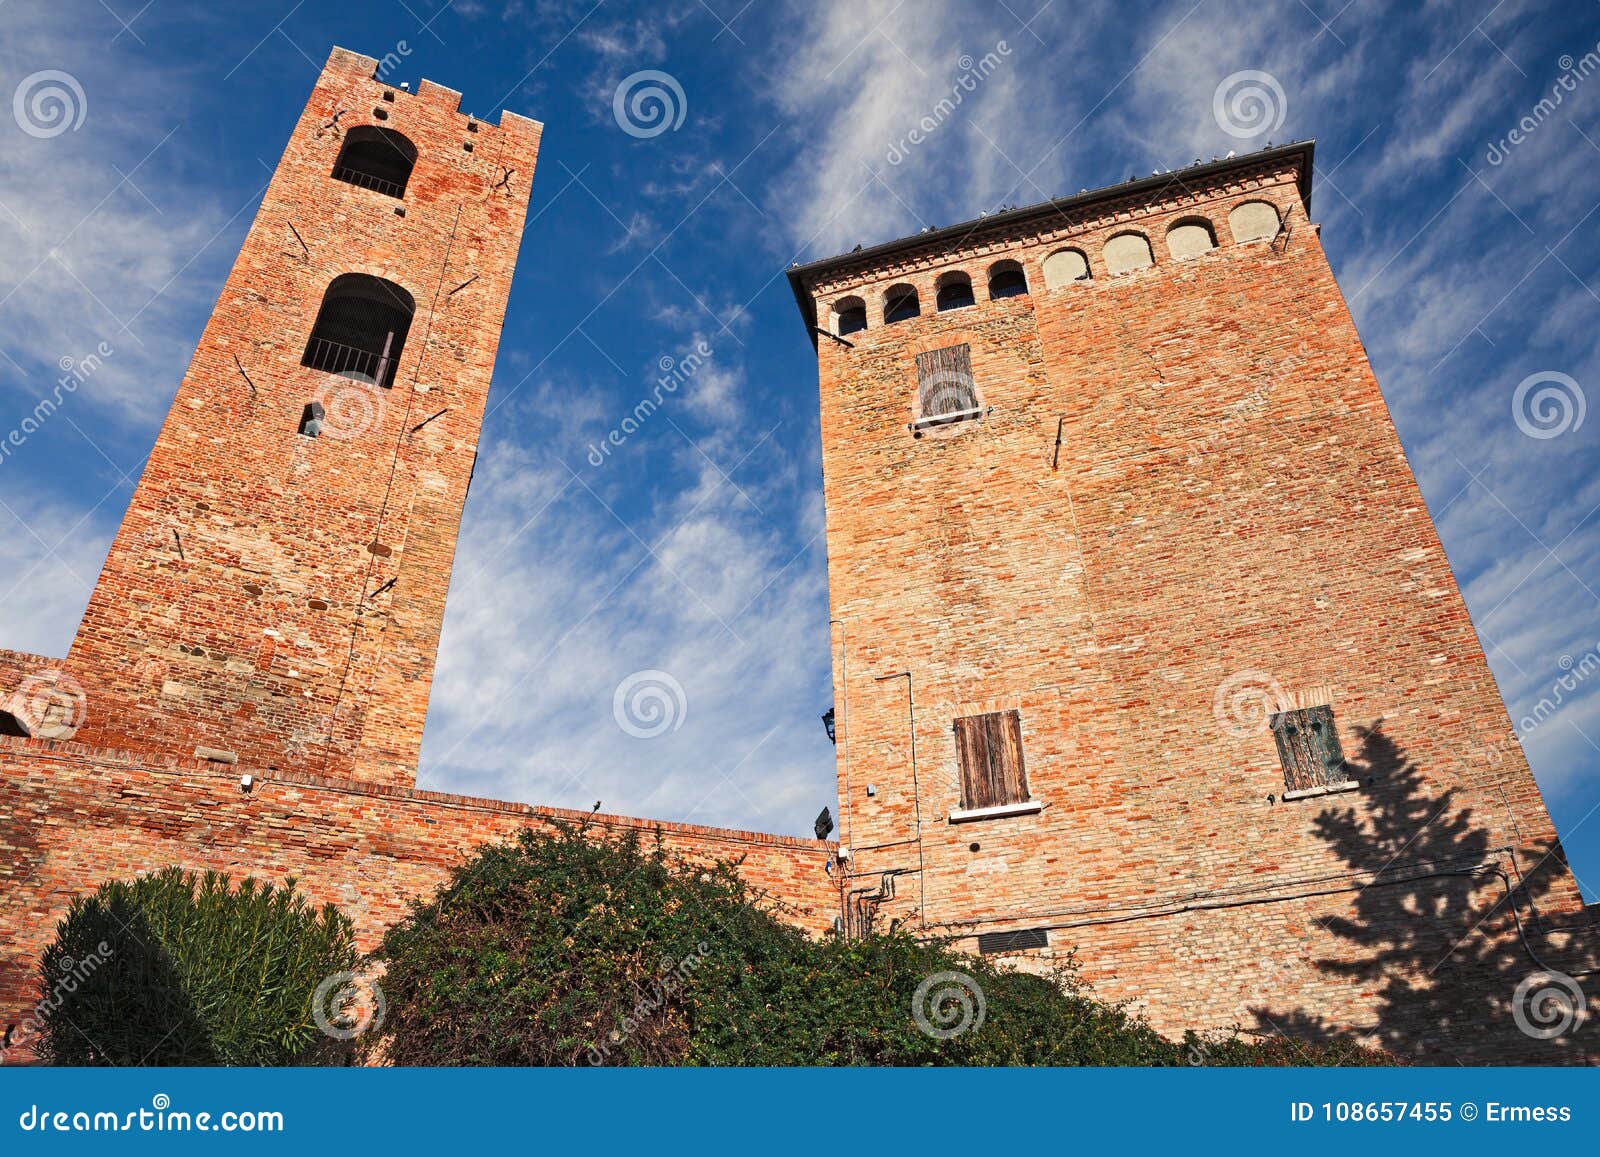 longiano, forli-cesena, emilia-romagna, italy: the medieval malatesta castle